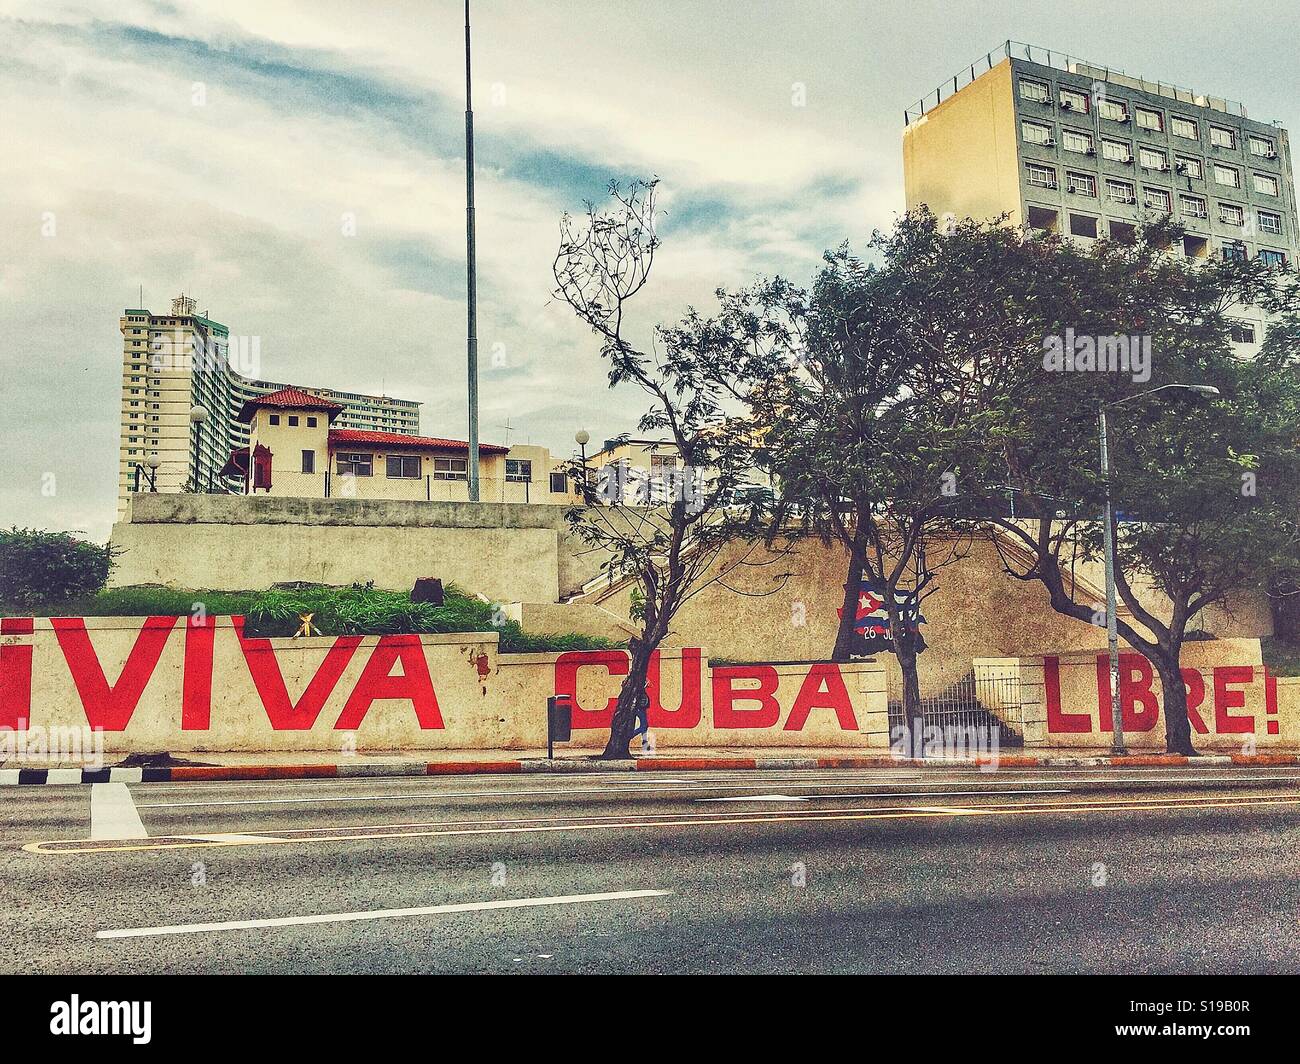 Download Viva Cuba Libre Stock Photo Alamy